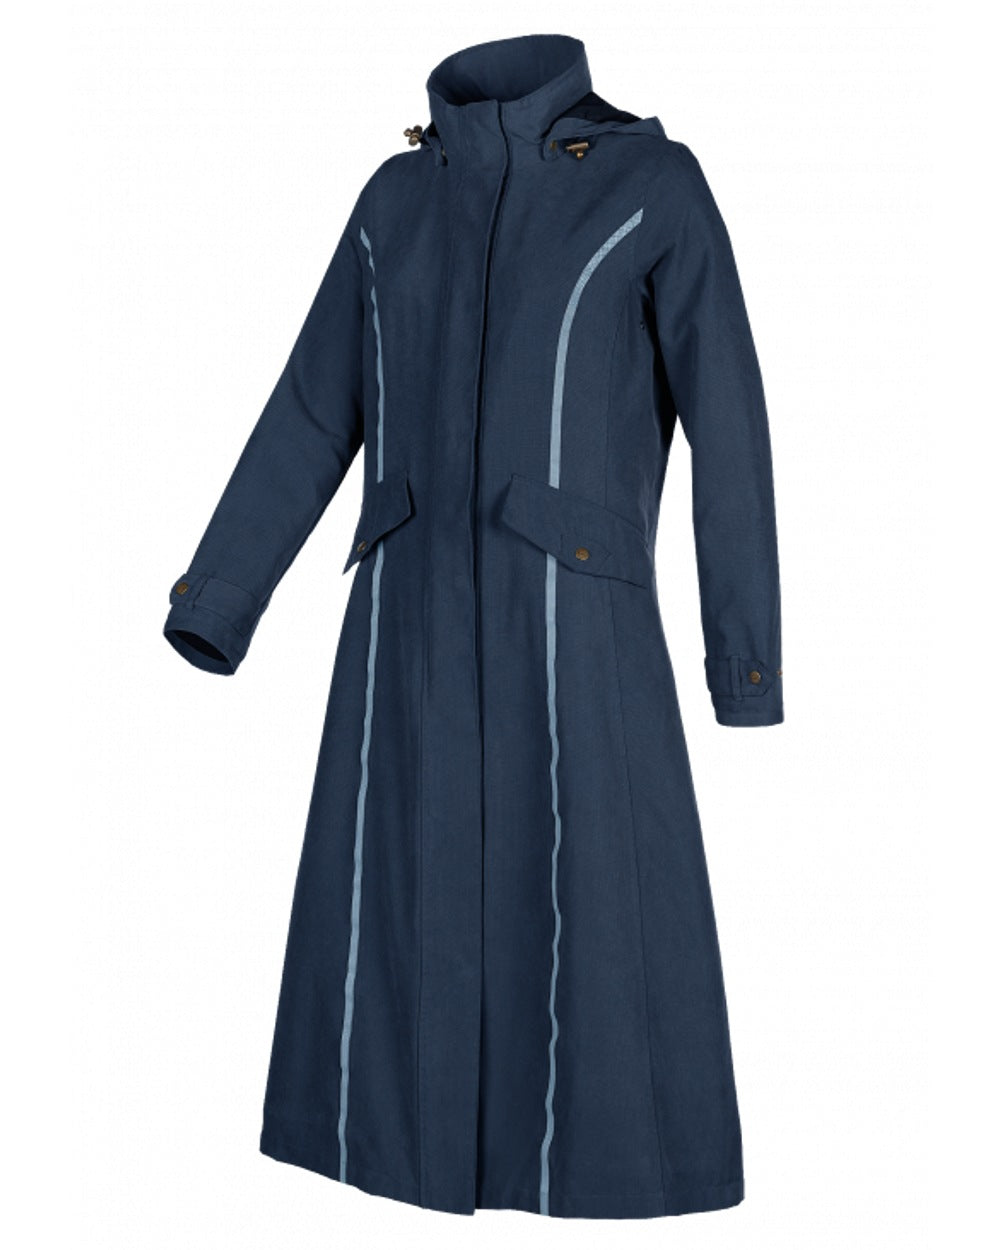 Baleno Kensington Safe Womens Long Riding Coat in Navy Blue 